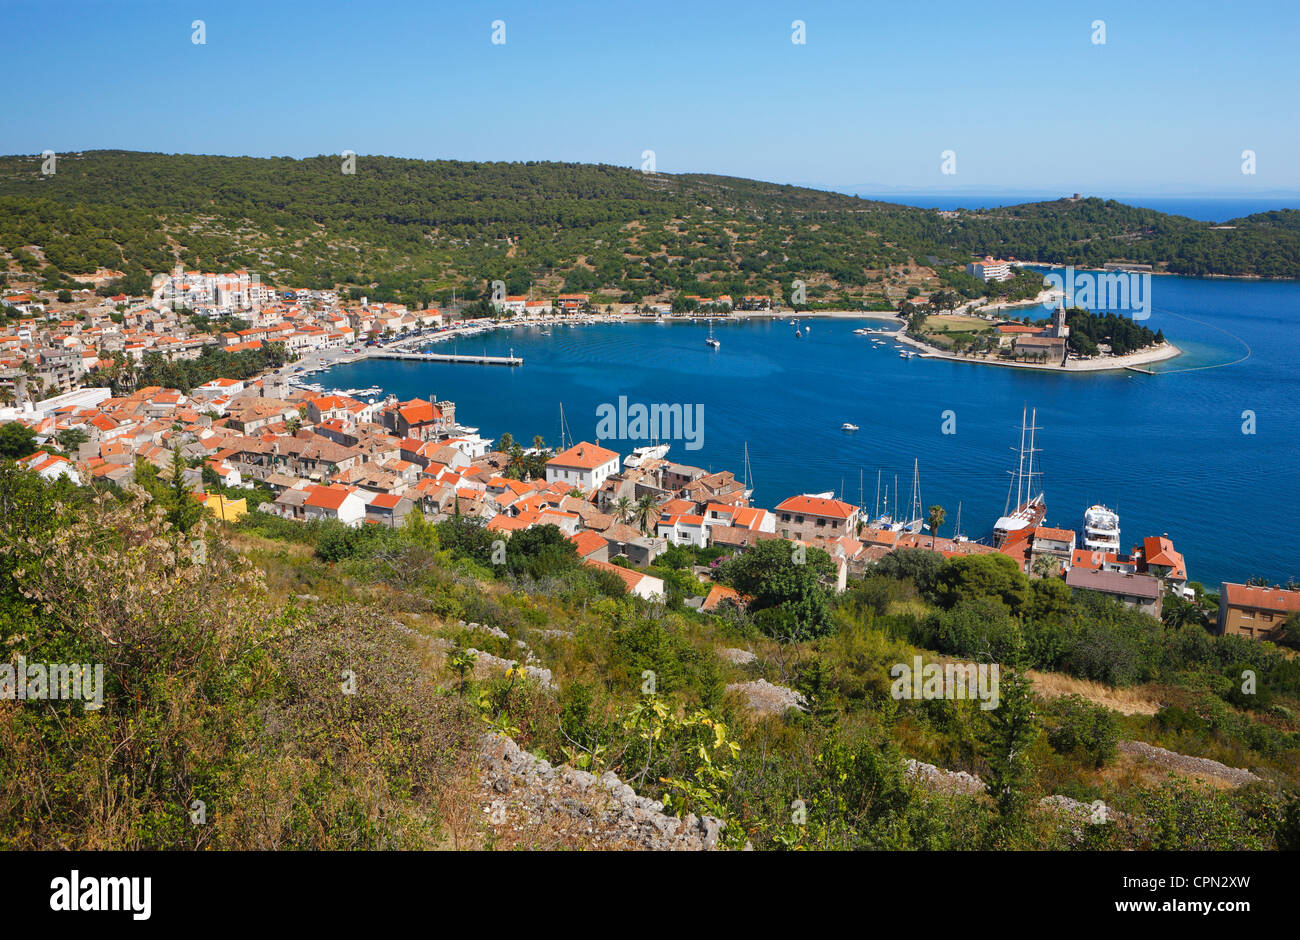 Die Stadt Vis - Insel Vis, Kroatien Stockfotografie - Alamy